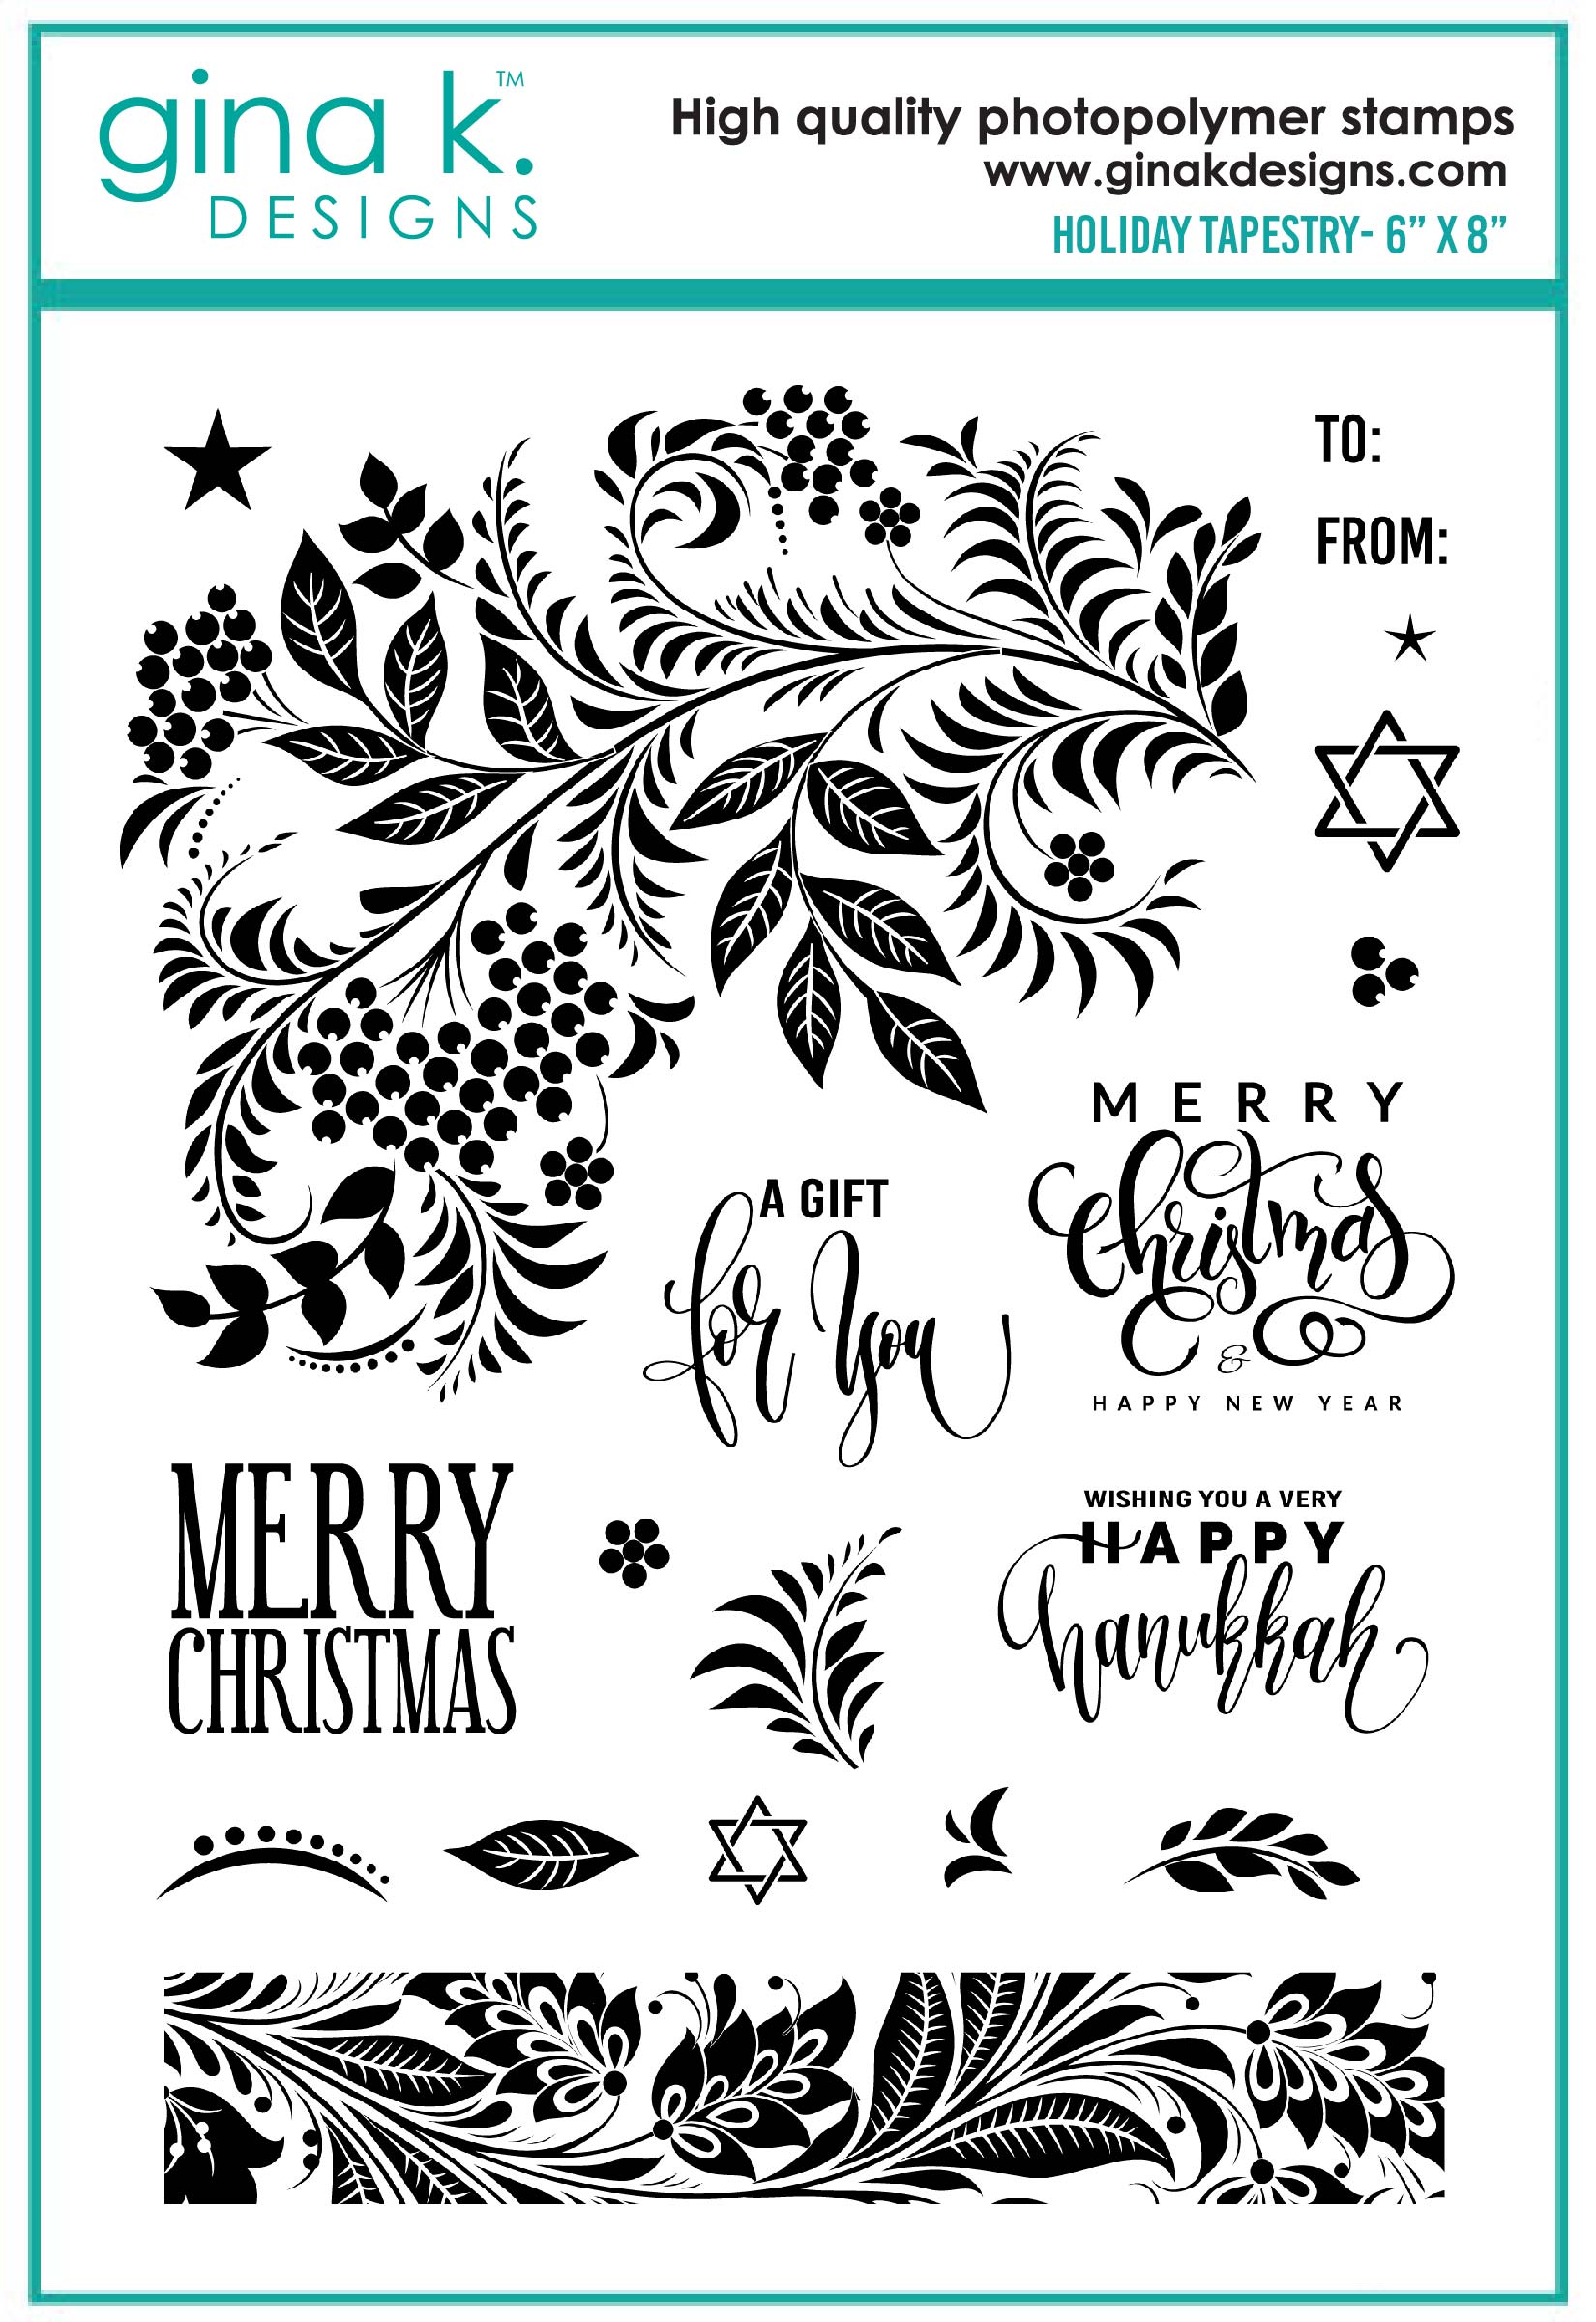 Gina K Designs - Holiday Tapestry Stamp Set